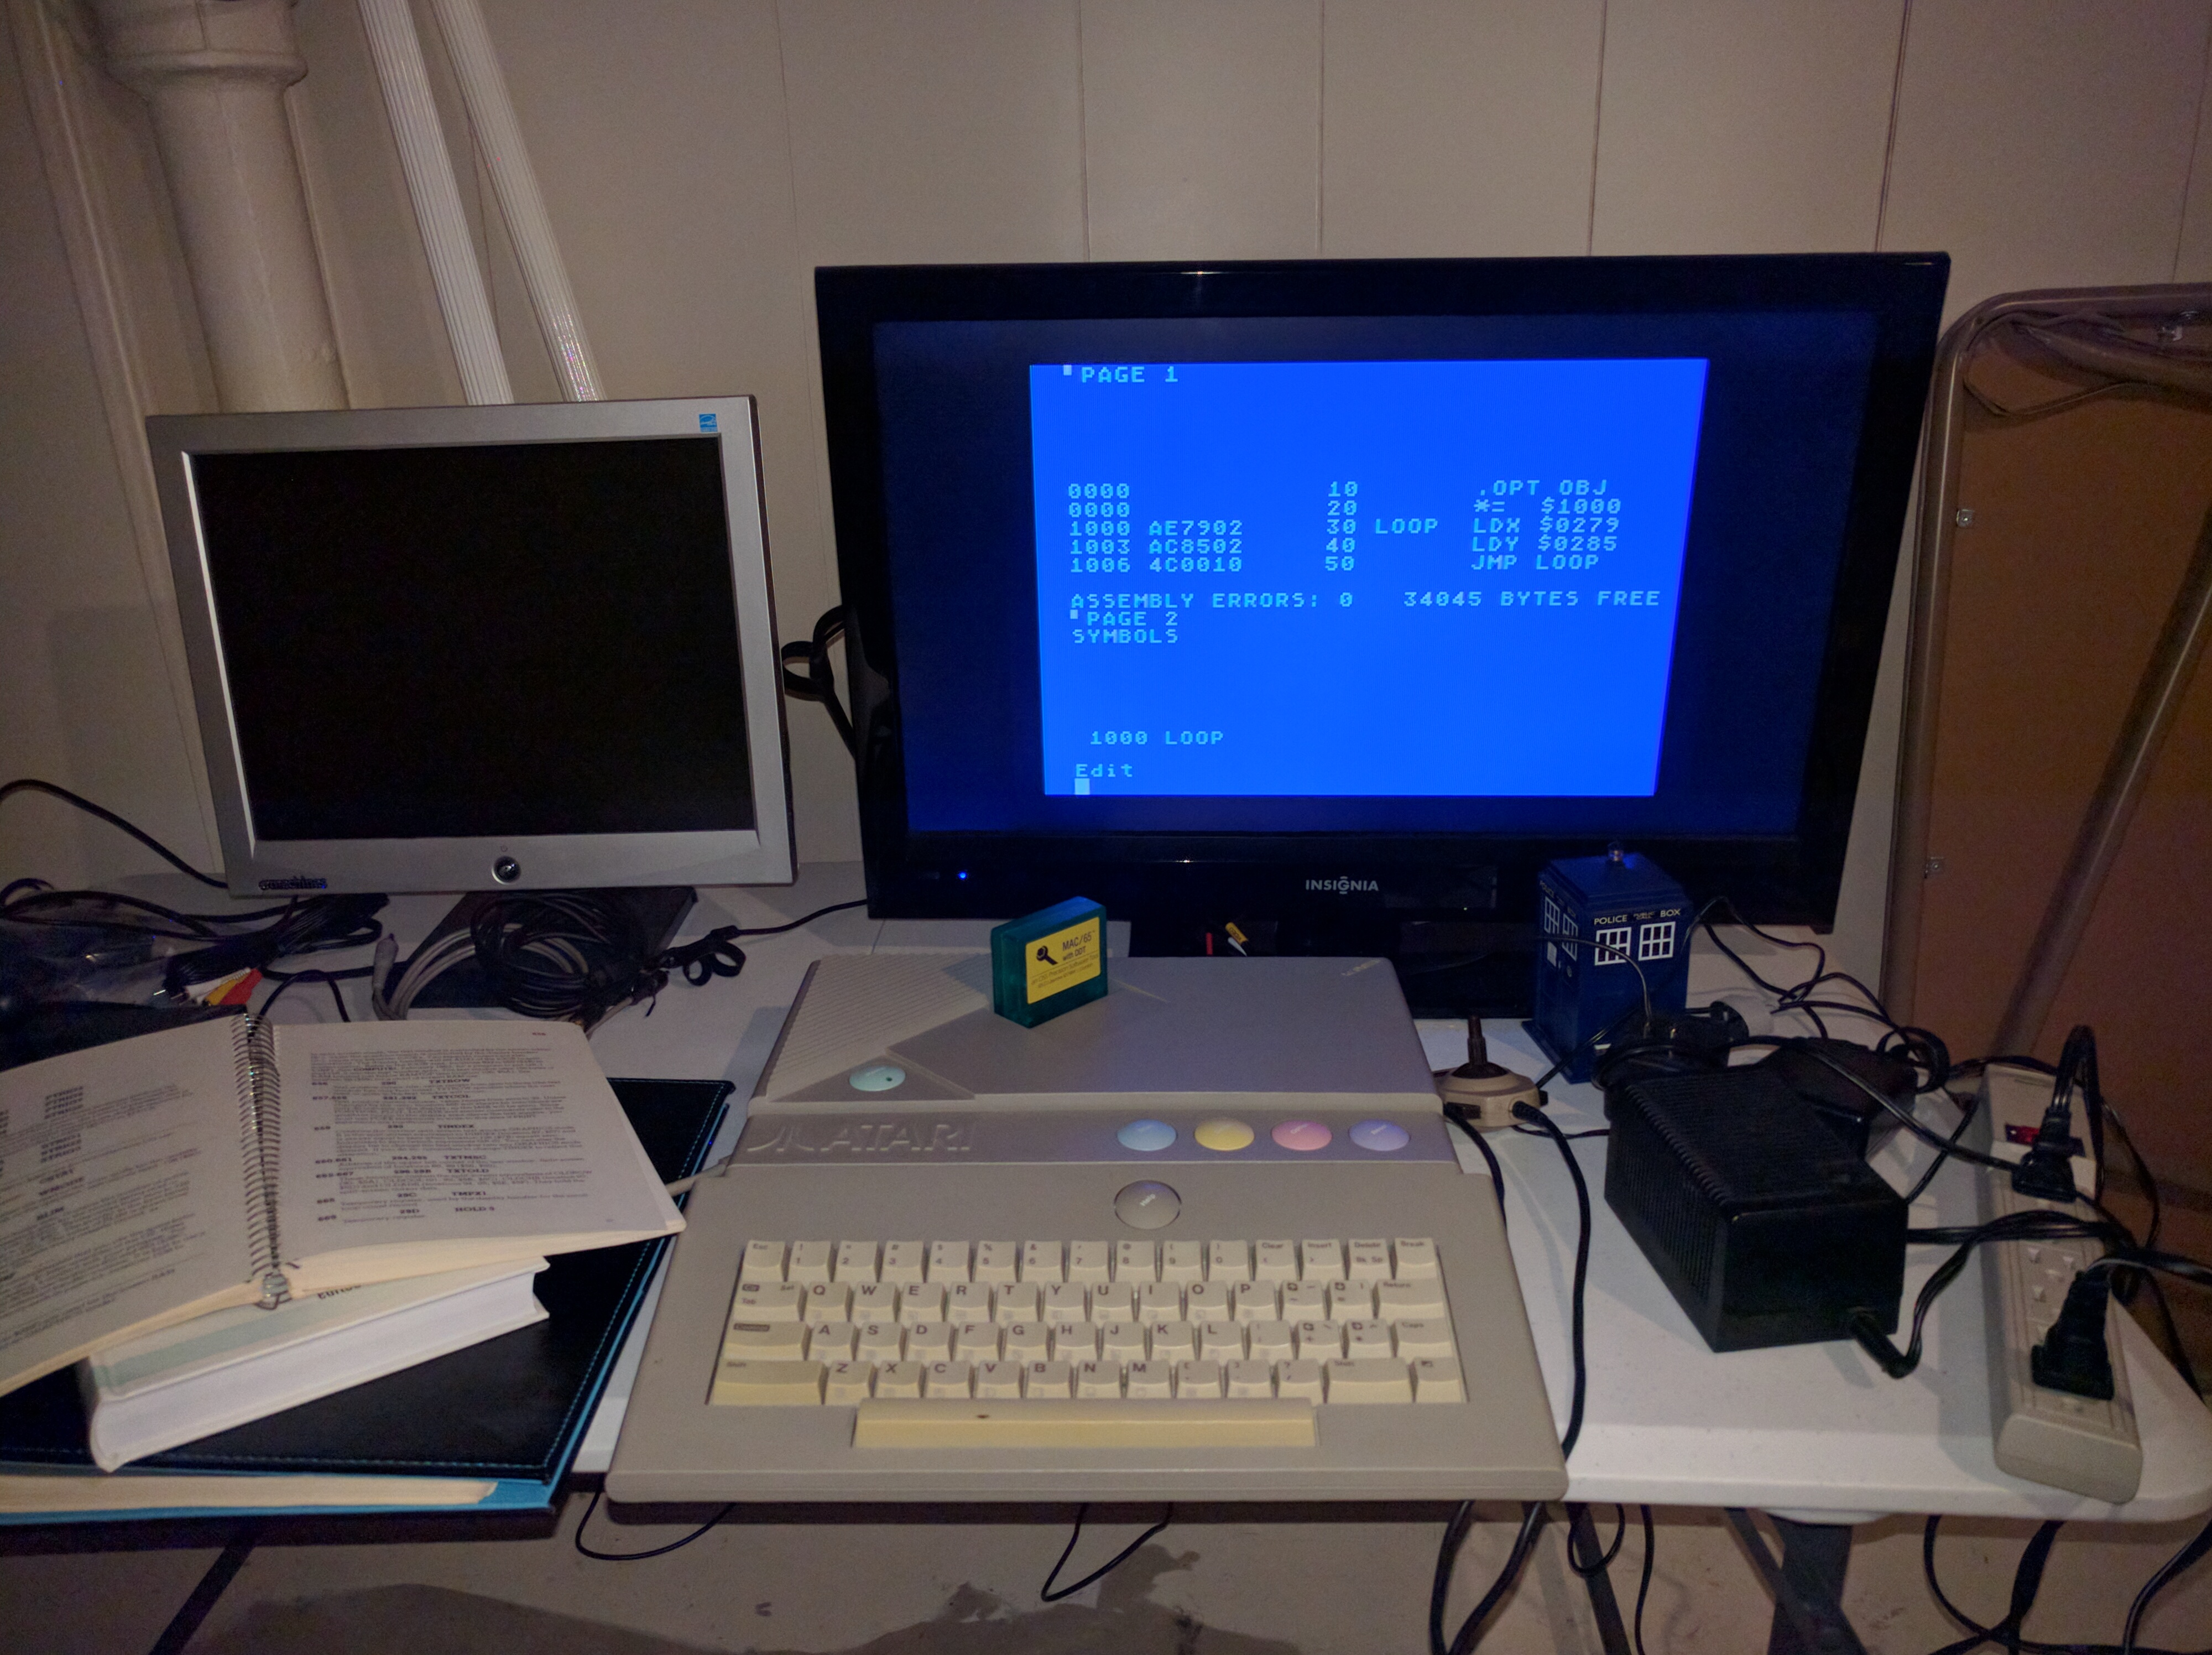 Playing around with Mac/65 on an Atari XEGS